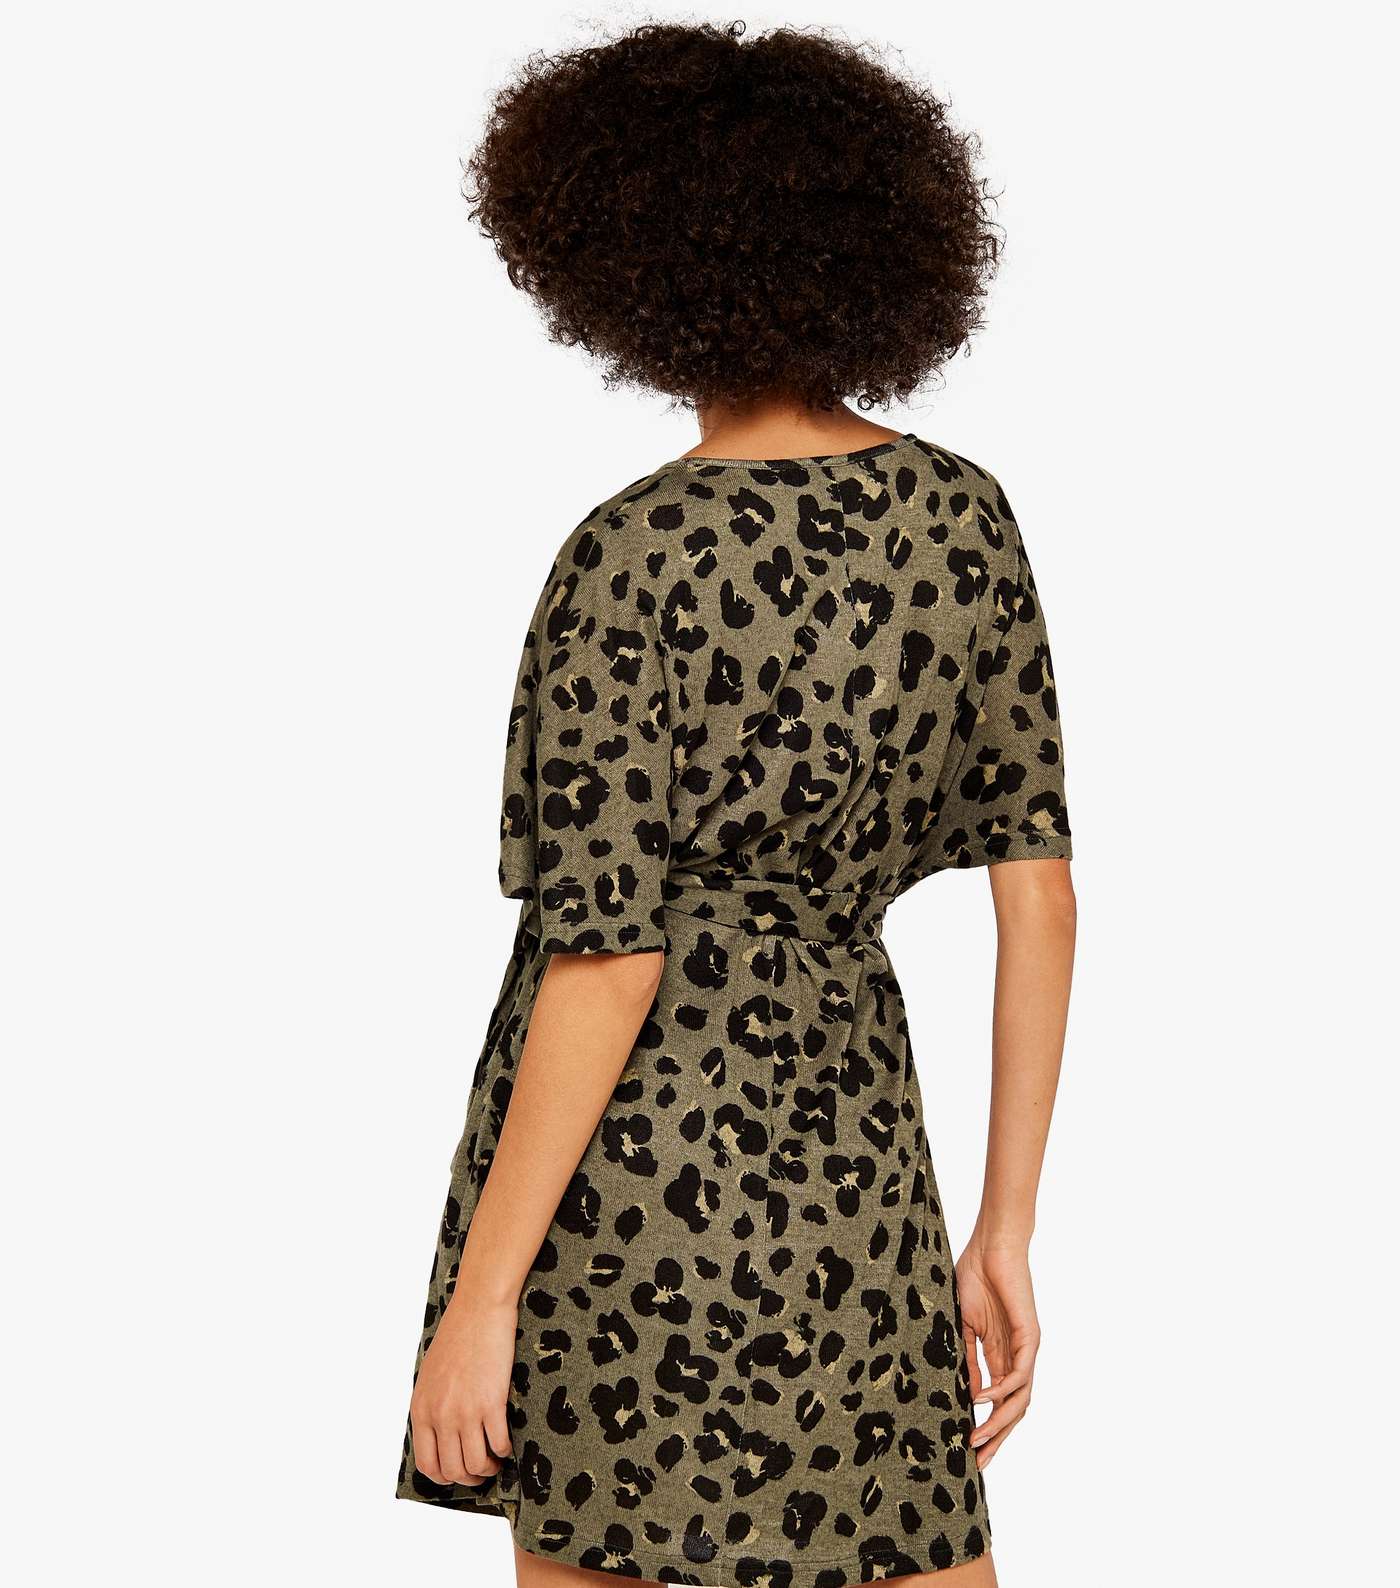 Apricot Olive Leopard Print Belted Mini Dress Image 3